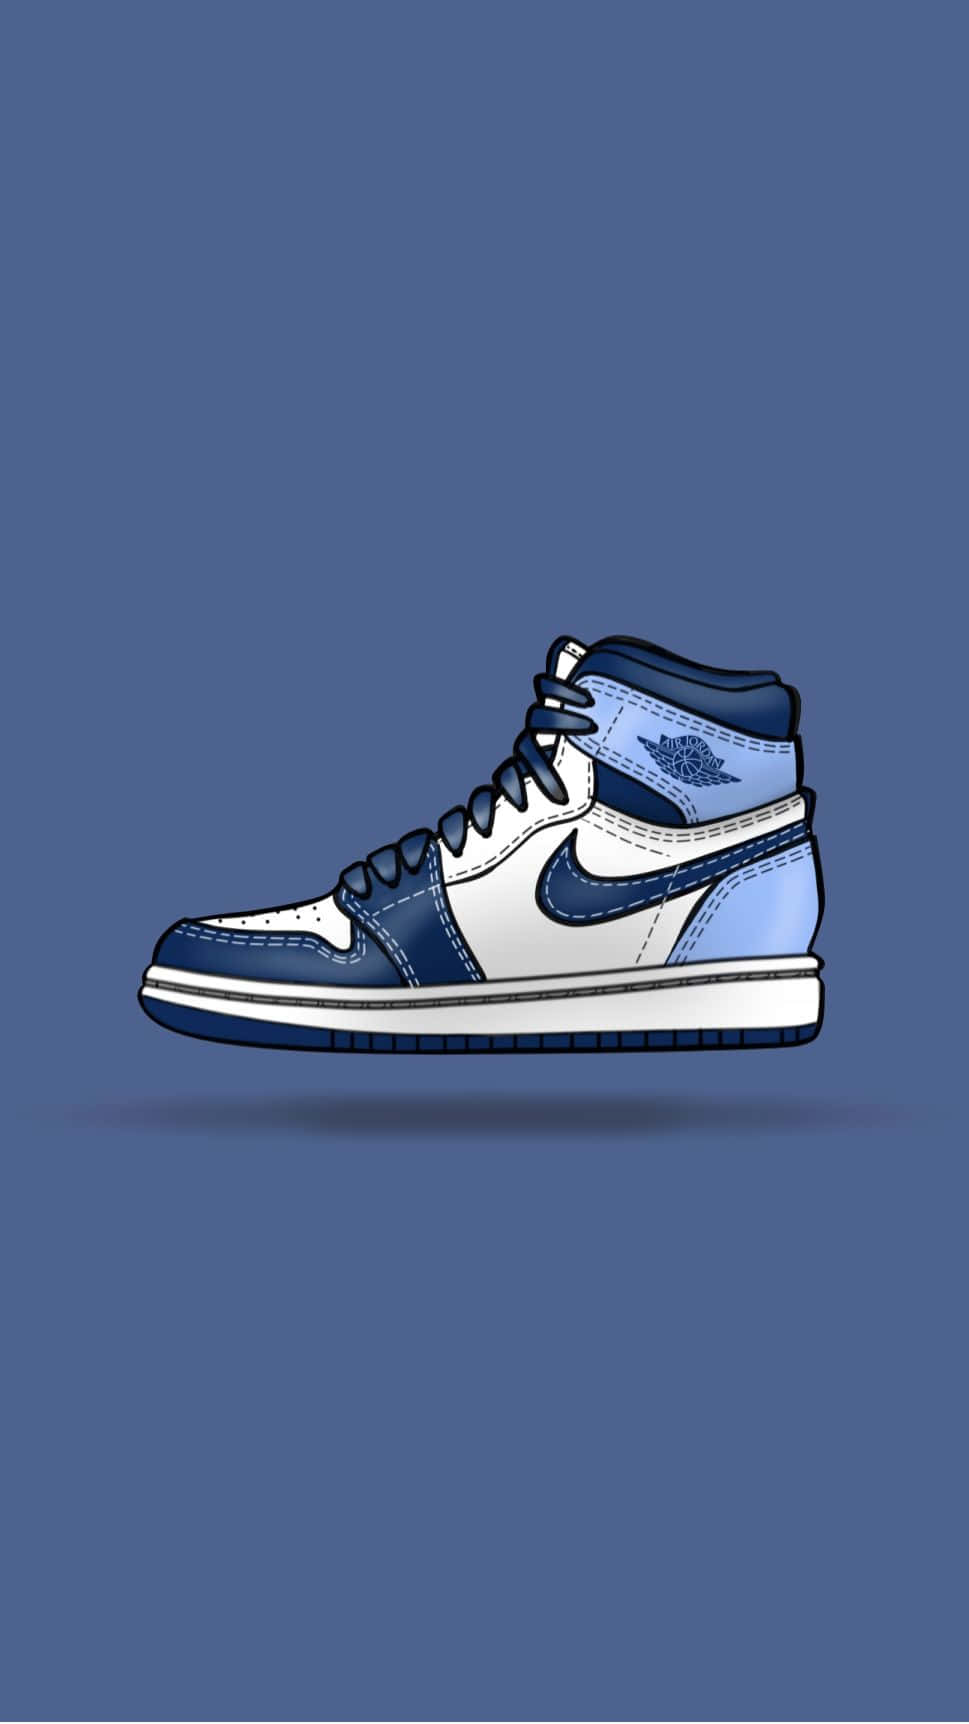 Floating Blue Nike Jordan Air Shoe Wallpaper